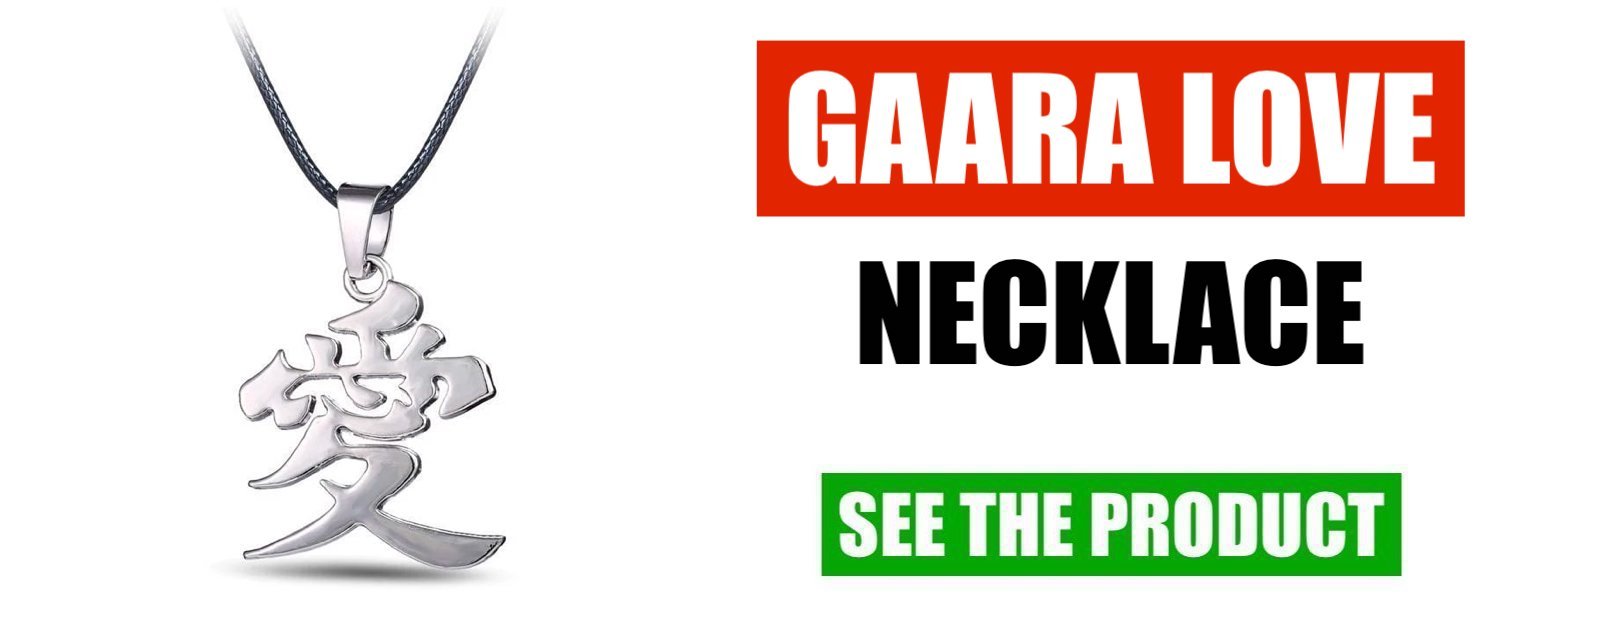 gaara love necklace